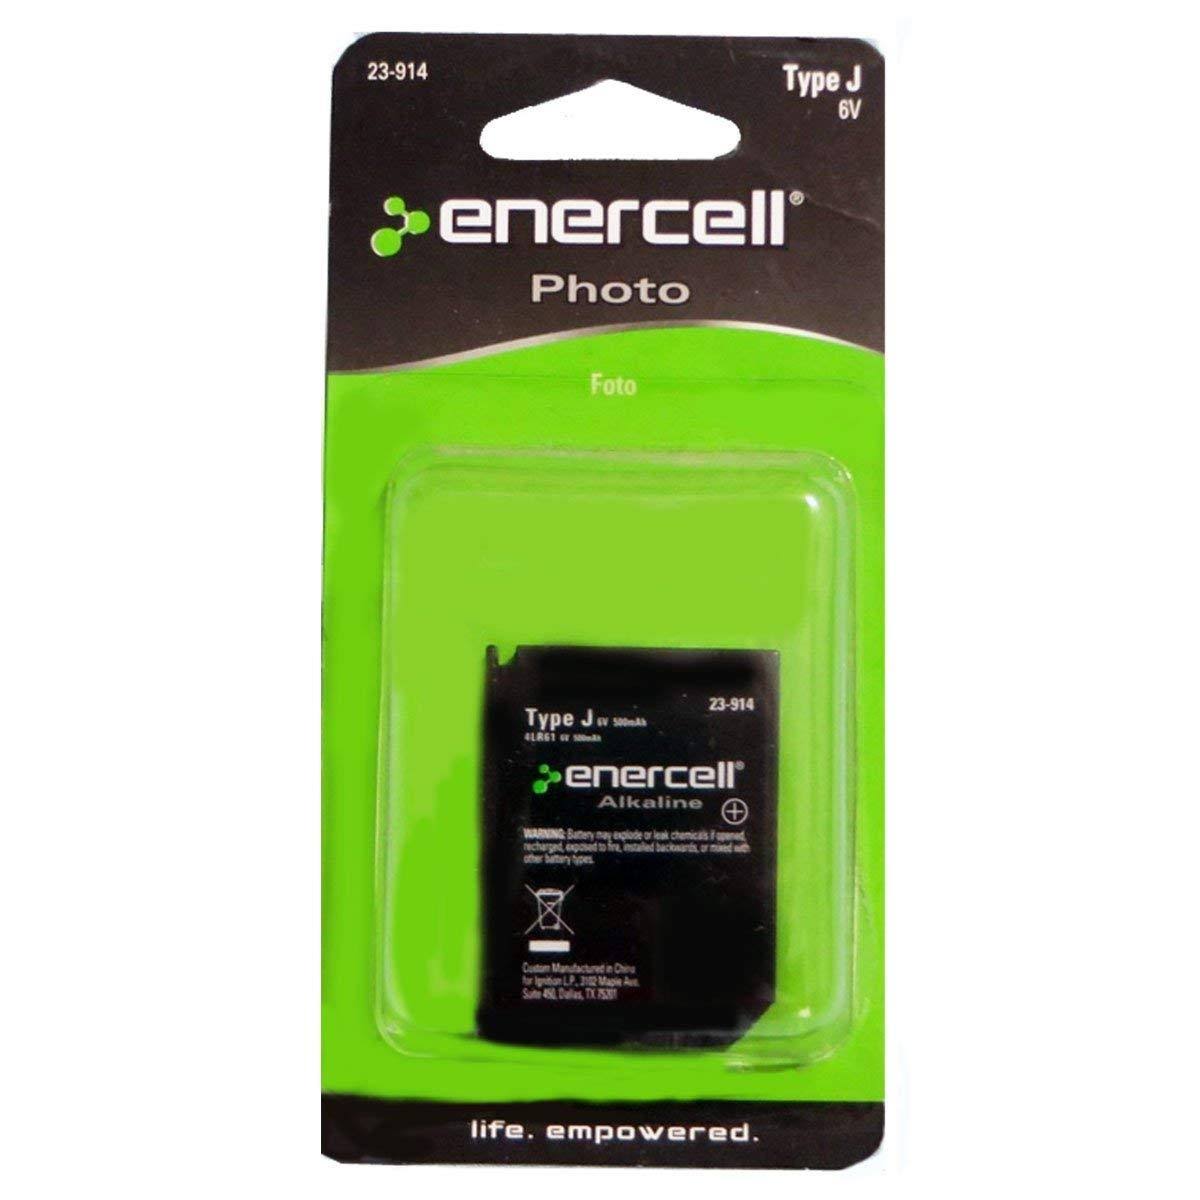 Enercell Type J Alkaline Camera Battery - 6V